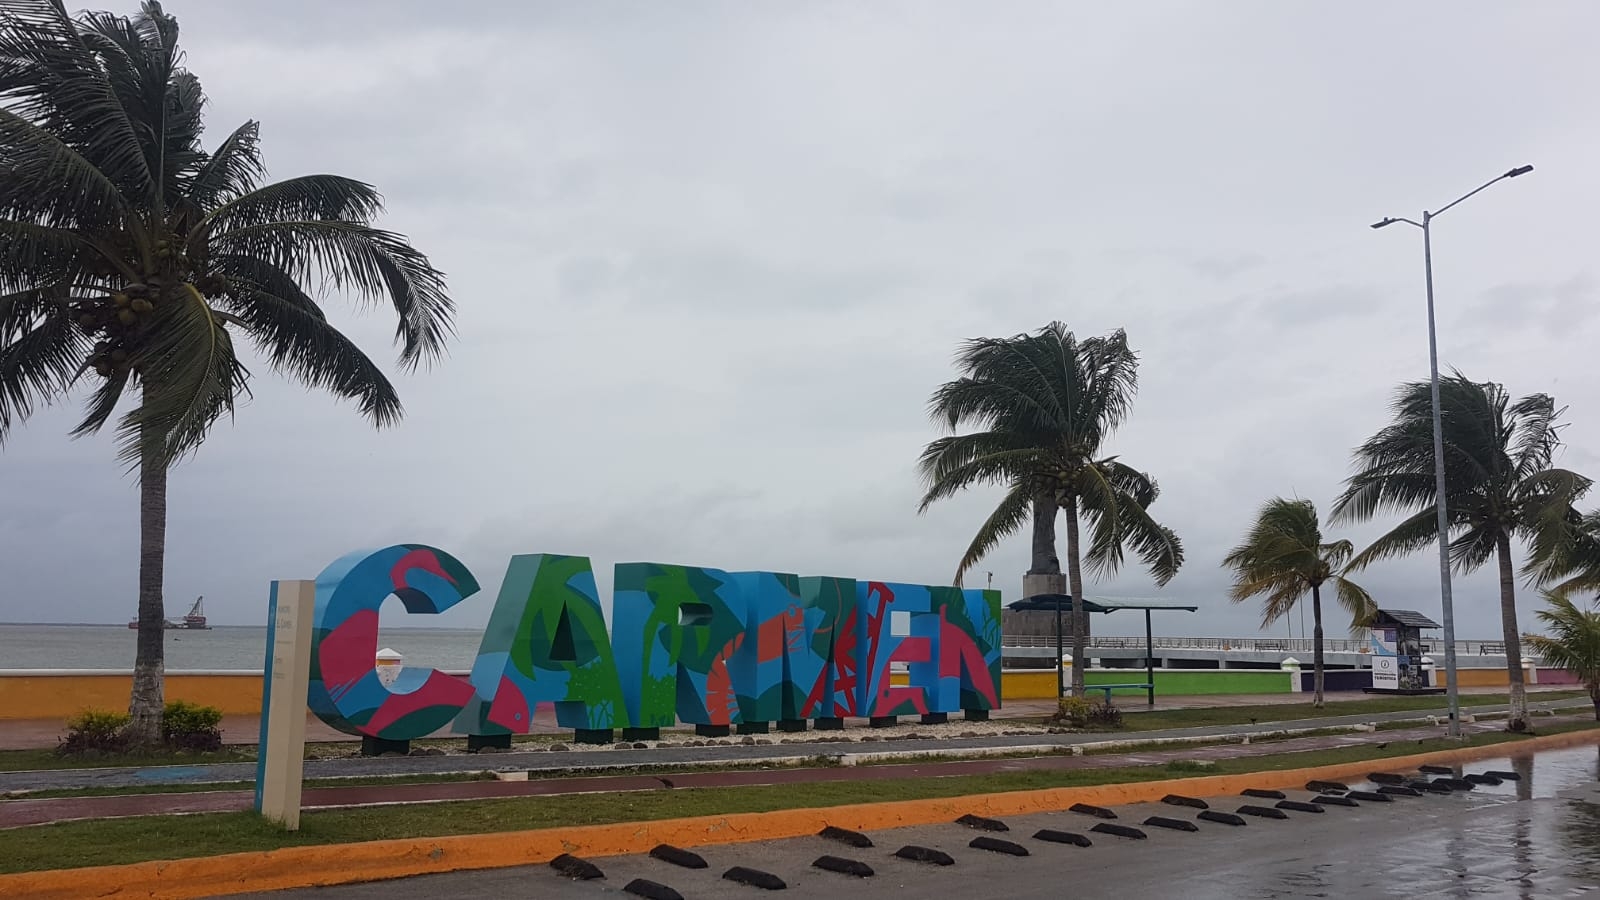 Clima Quintana Roo 04 de febrero: SMN pronostica lluvias muy fuertes